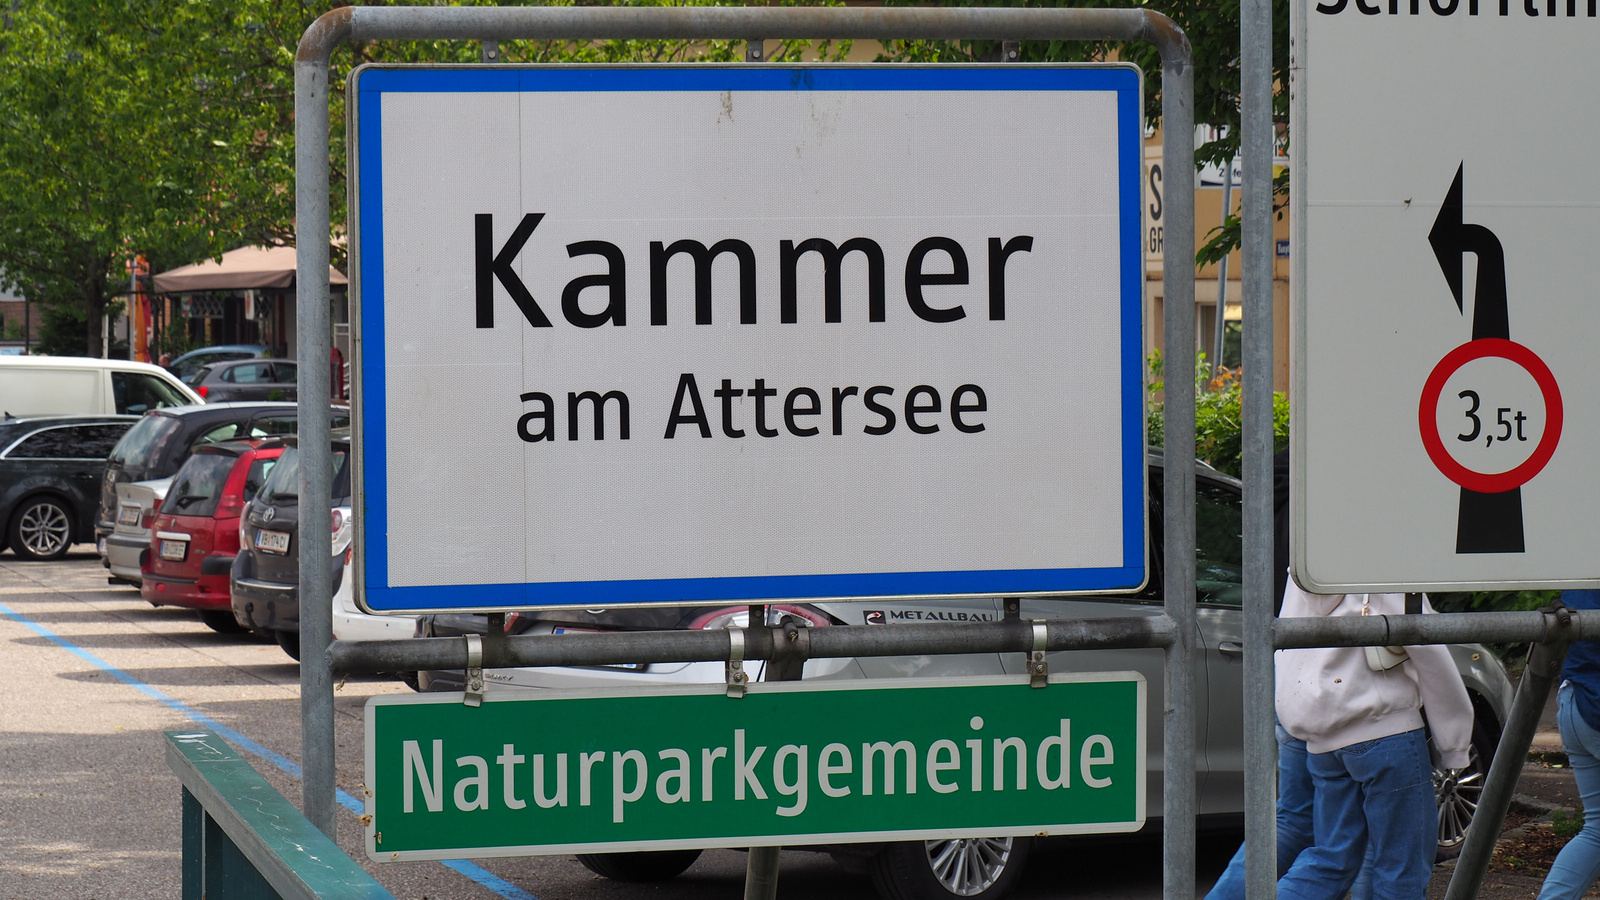 Schörfling am Attersee (Kammer), SzG3